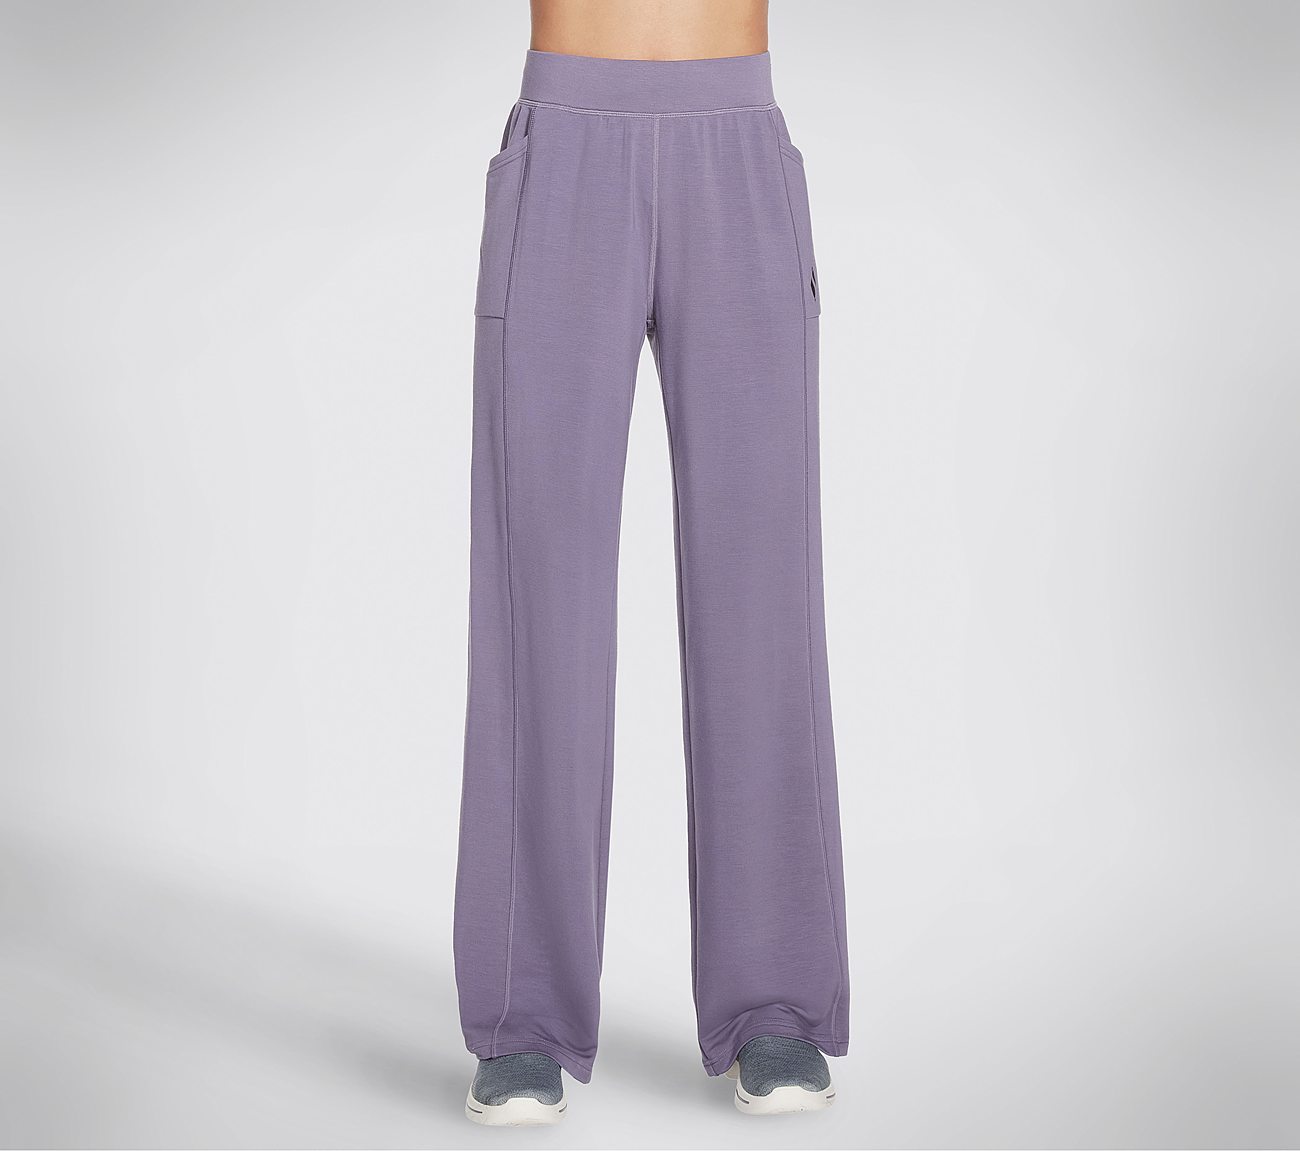 Skechers Restful 4 Pocket Pant, Grey Purple Loose Pants For Women